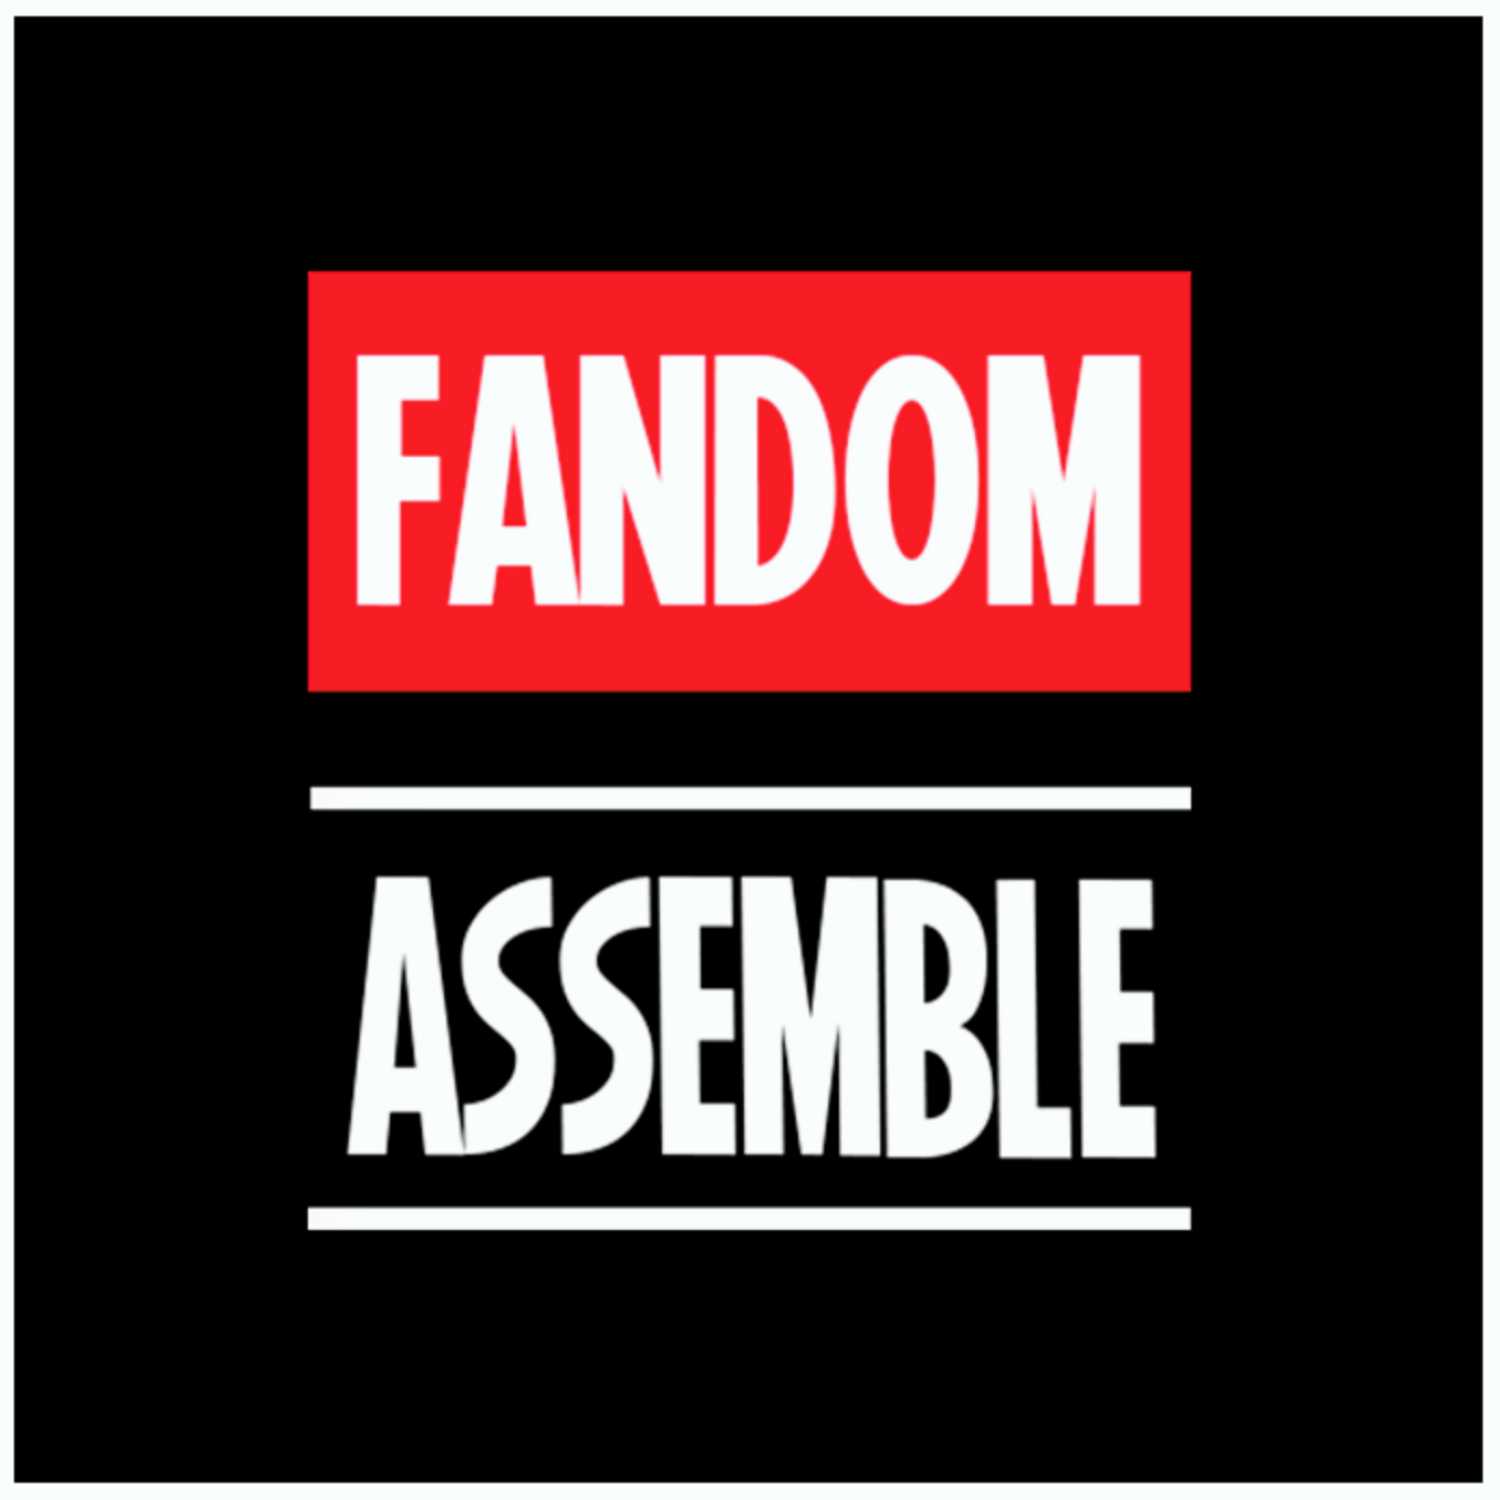 Fandom Assemble